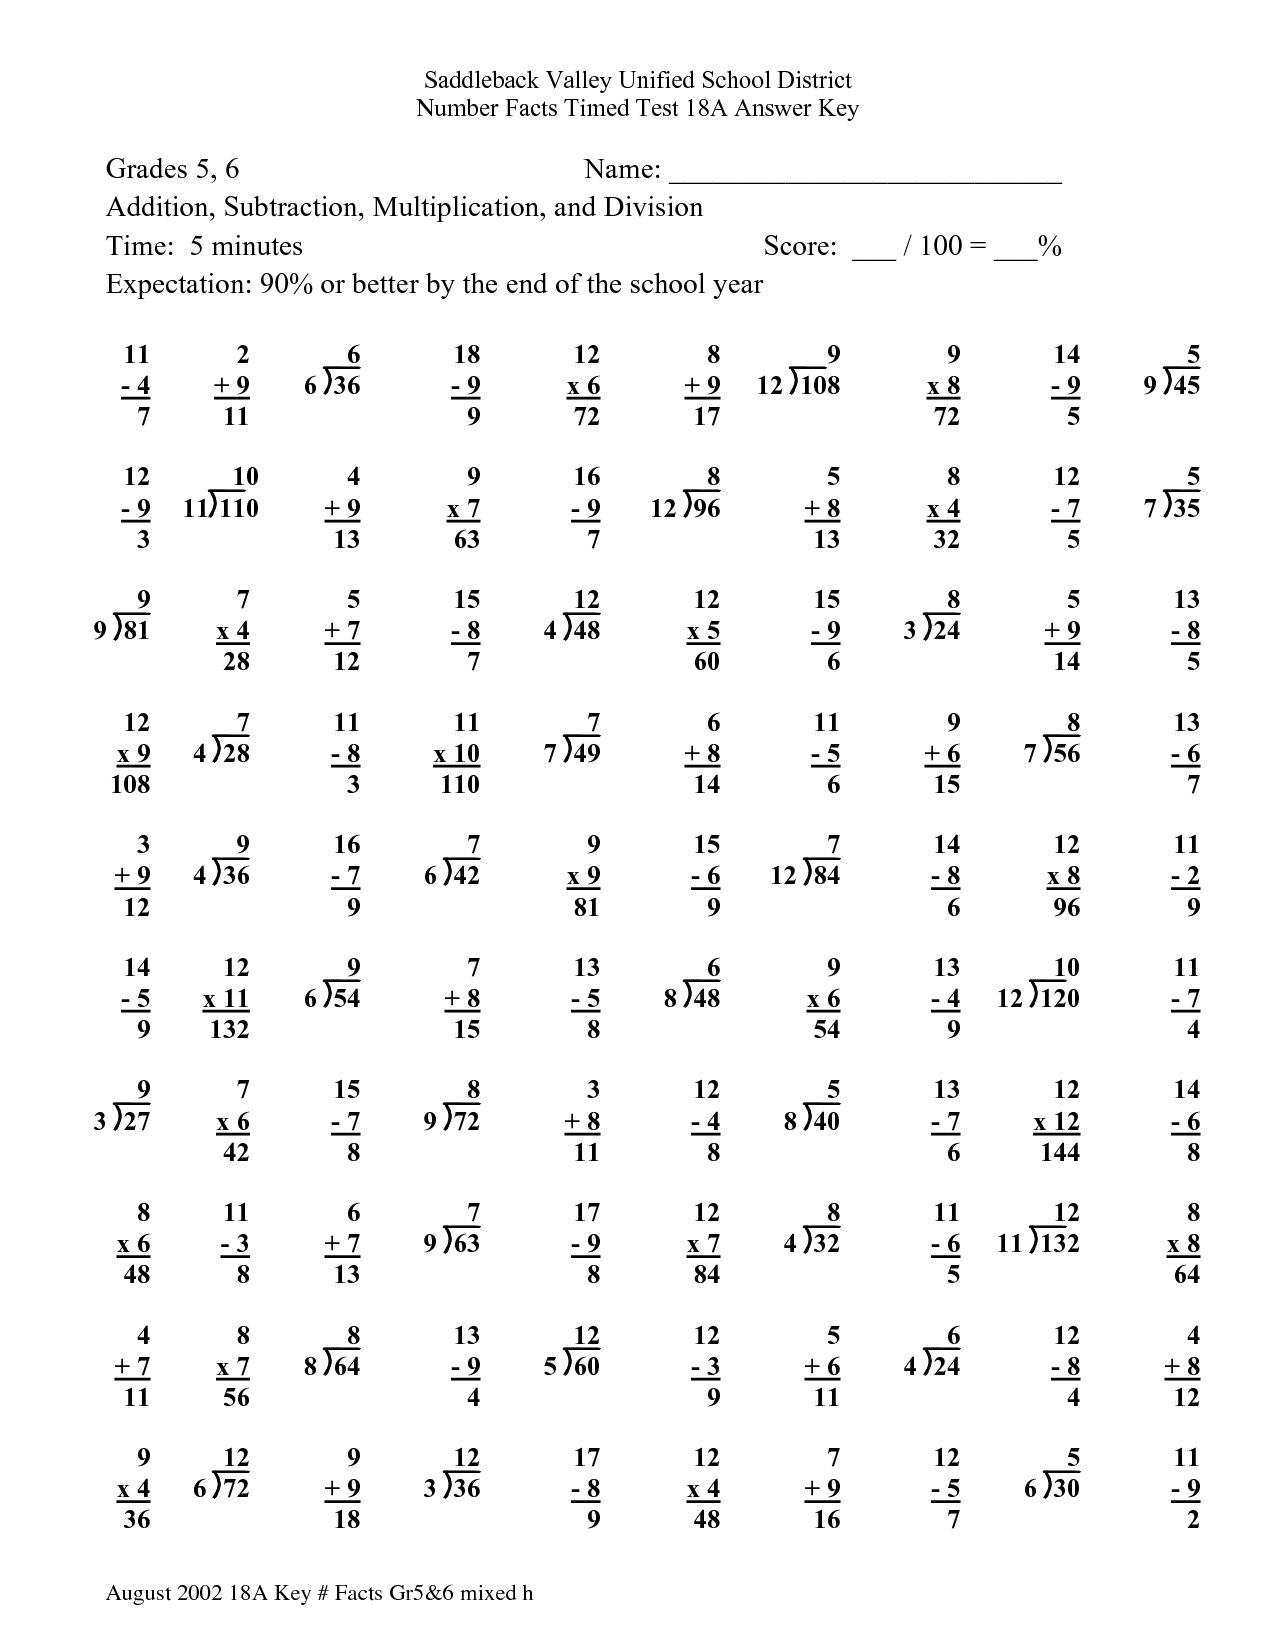 Printable Multiplication And Division Worksheets PrintableMultiplication